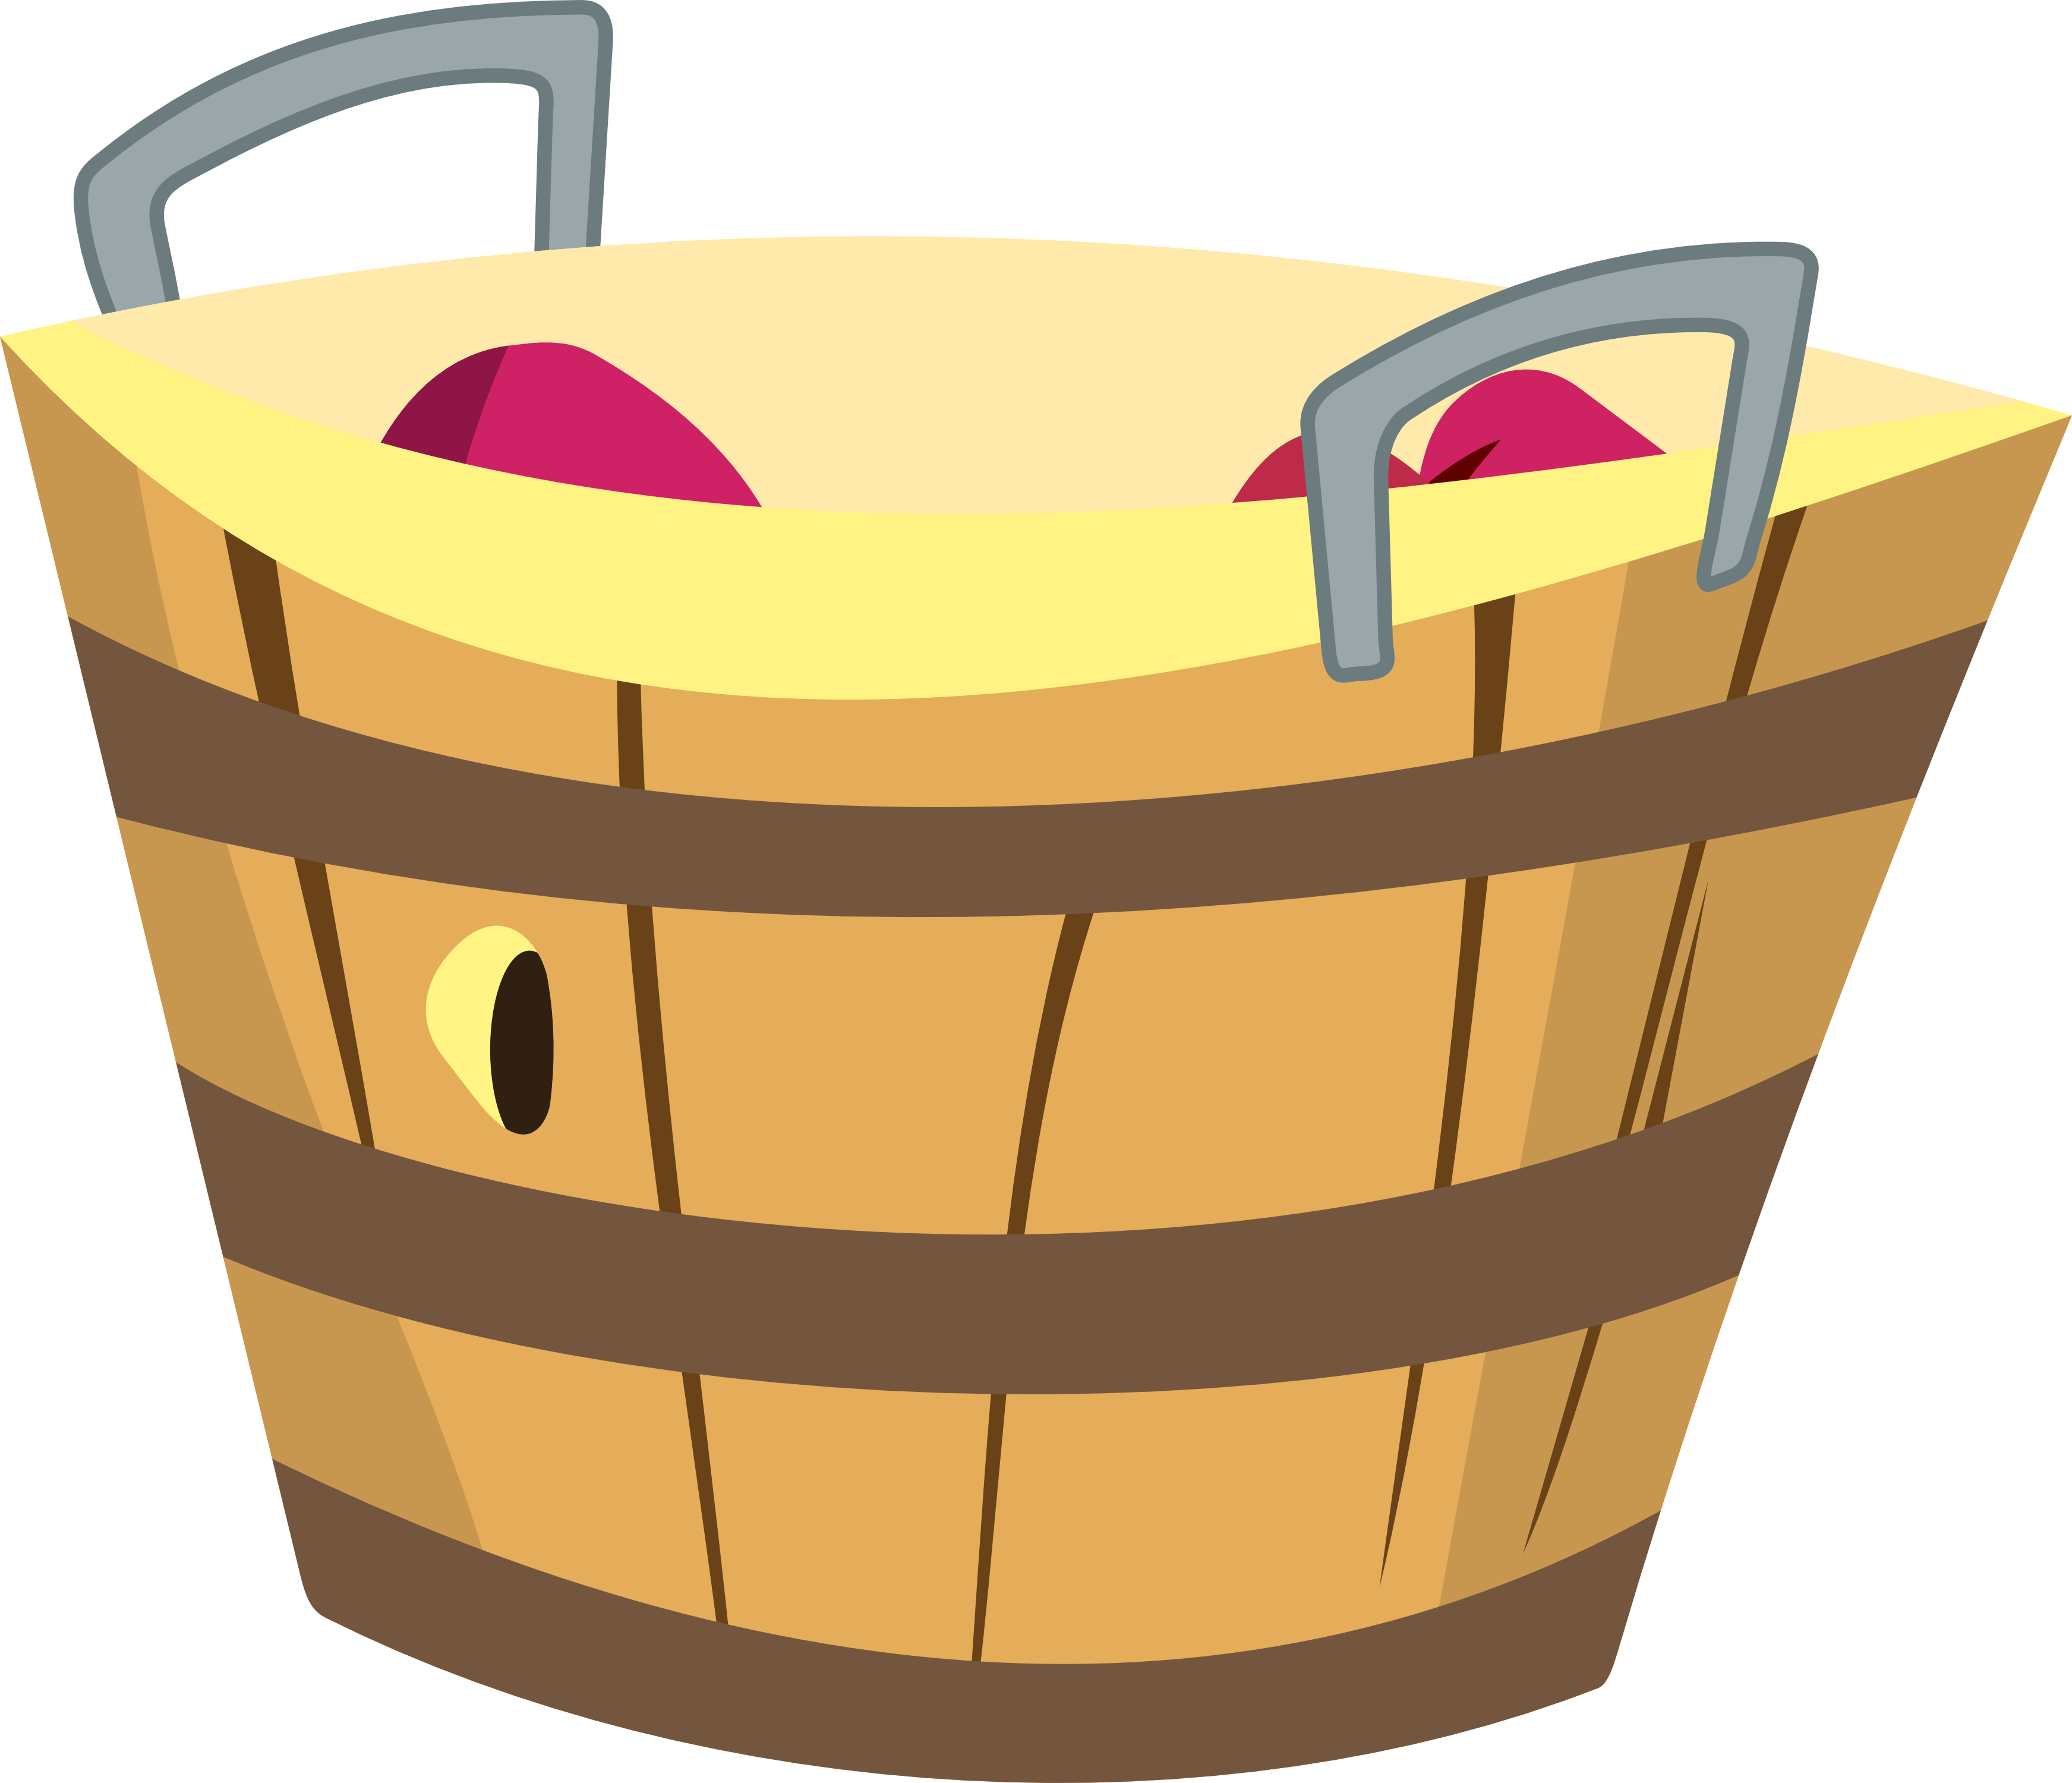 Mostly Empty Apple Bucket by uxyd  